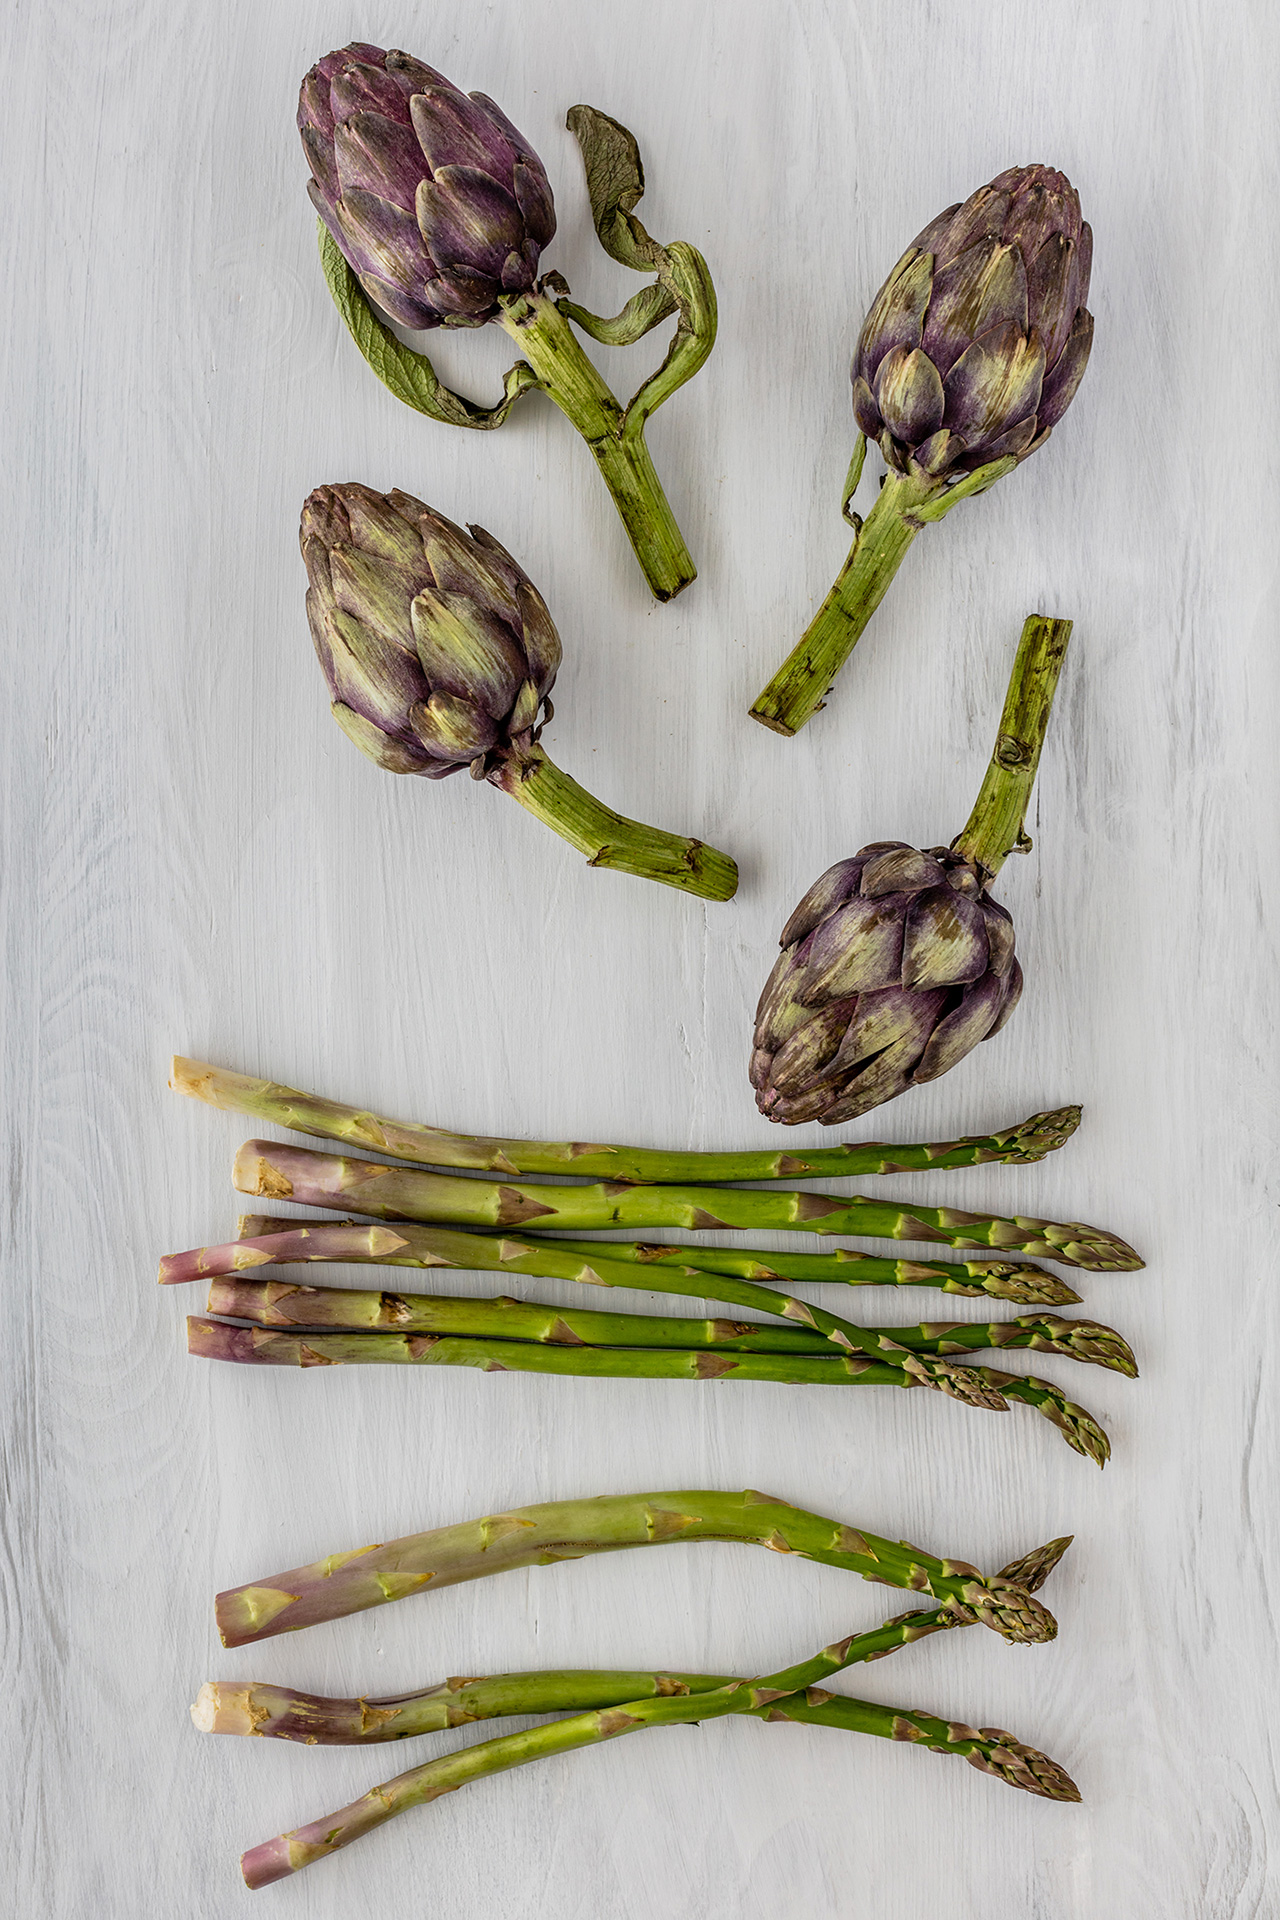 Jon Kempner - Food Photographerm - Artichokes and Asparagus